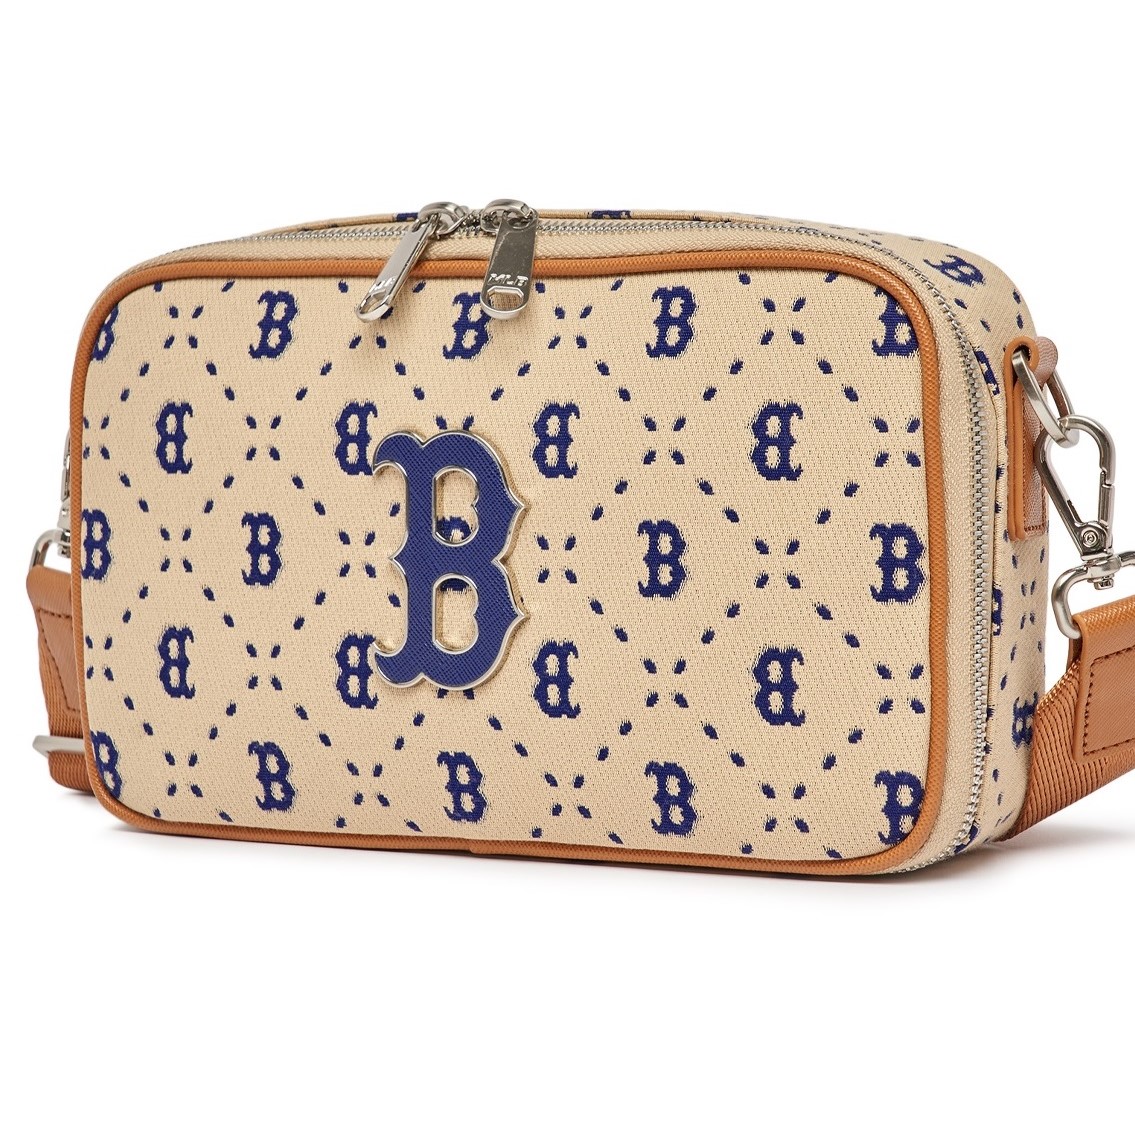 NEW Limited! Dooney & Bourke MLB Boston Red Sox Purse Bag